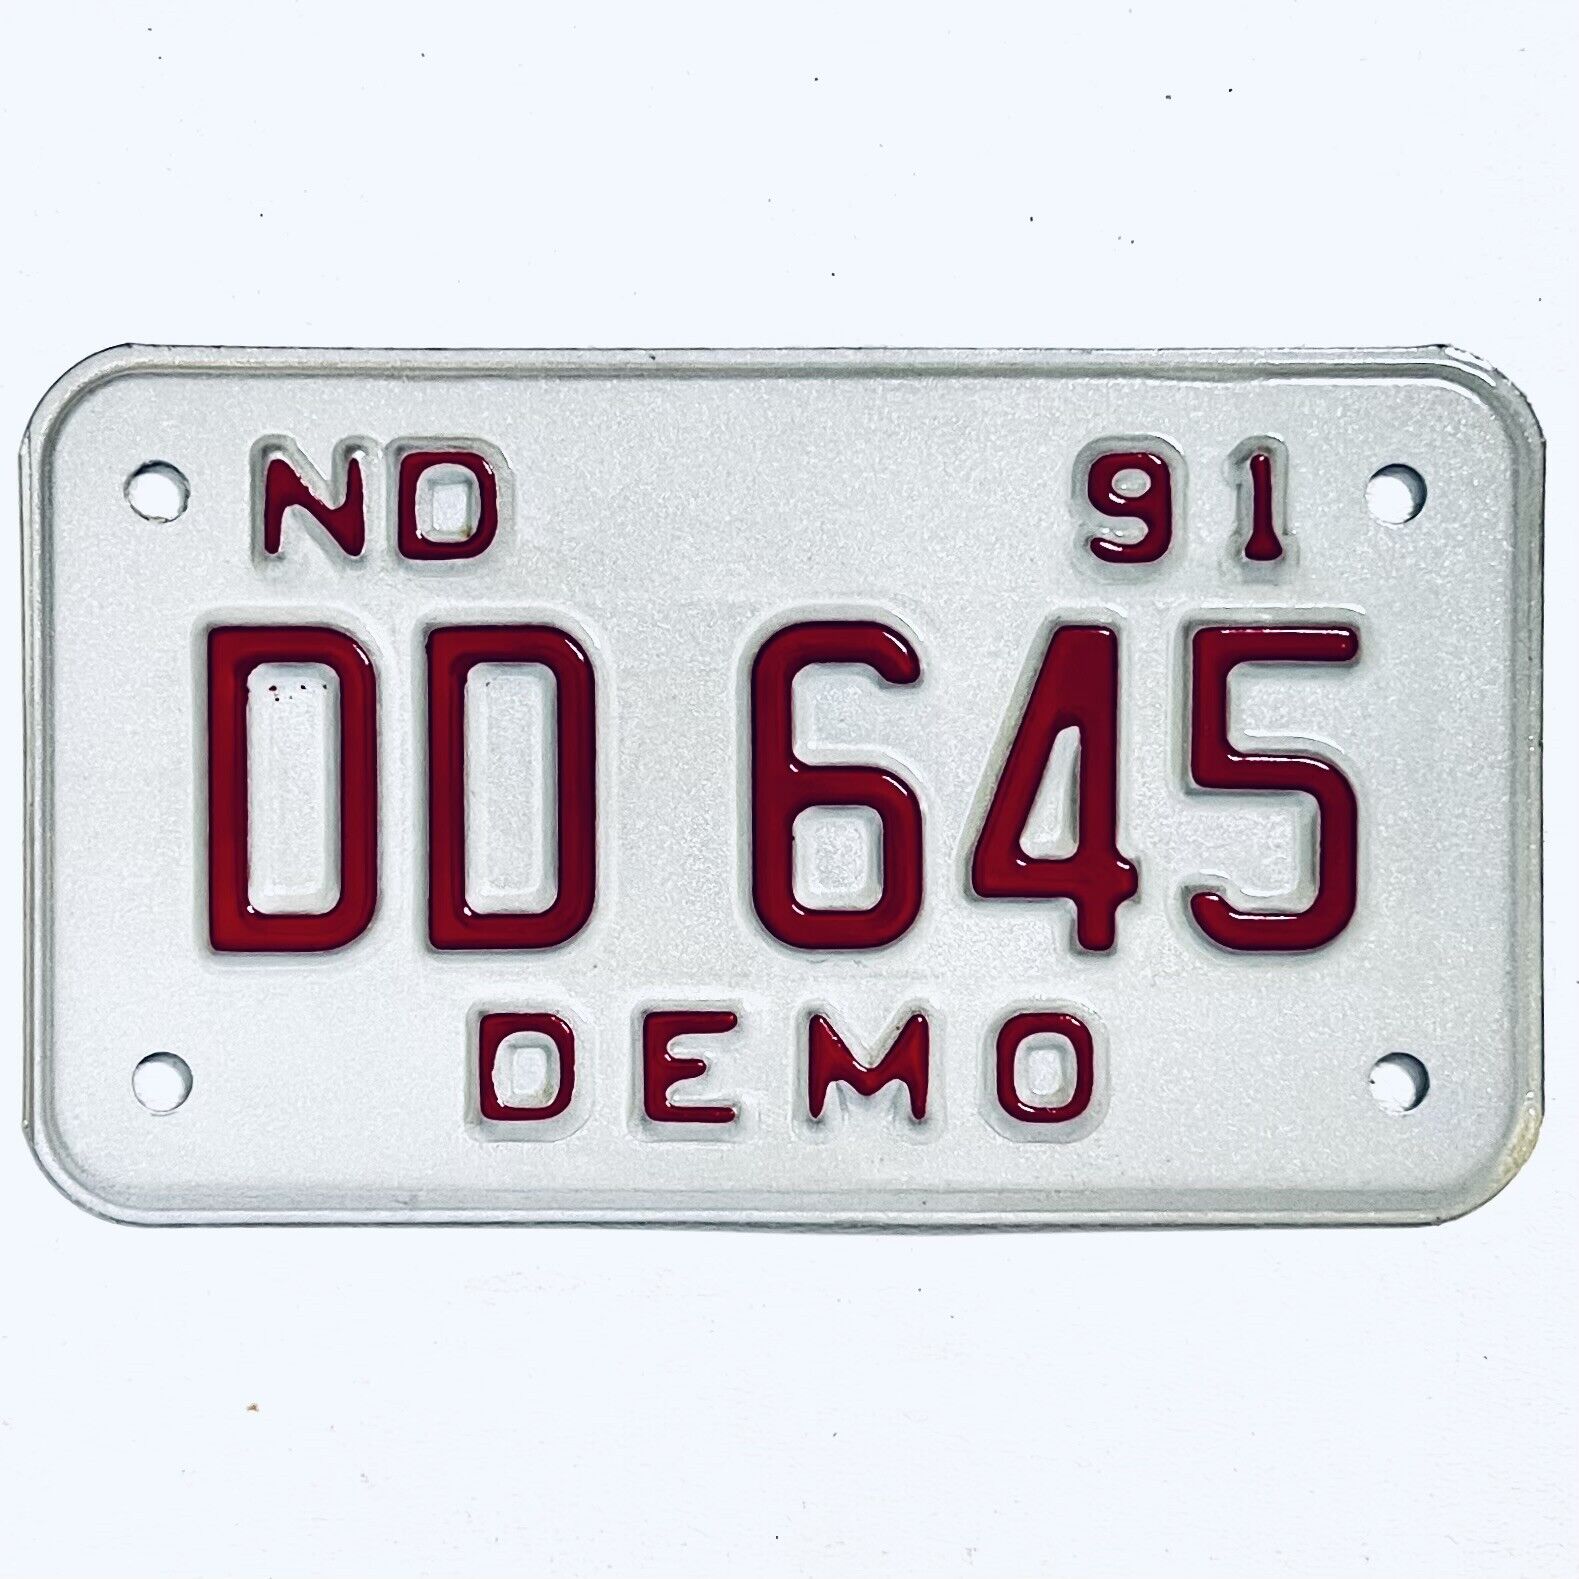 1991 United States North Dakota DEMO Special License Plate DD 645